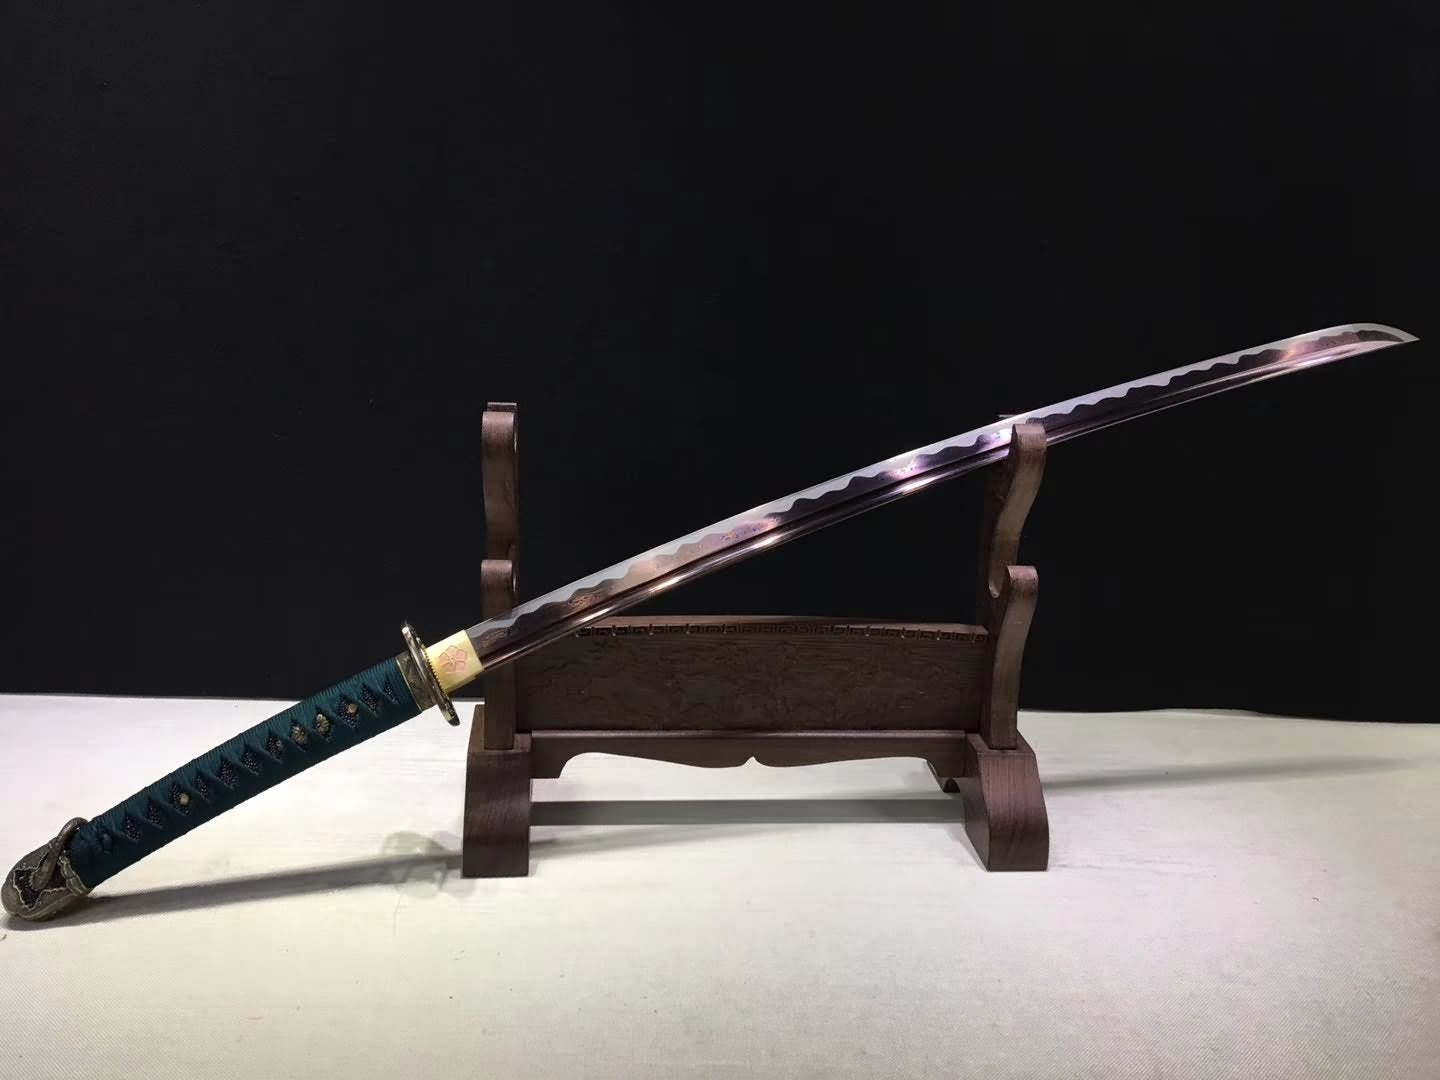 Tachi,Samurai sword,Damascus steel blade,Rosewood scabbard - Chinese sword shop